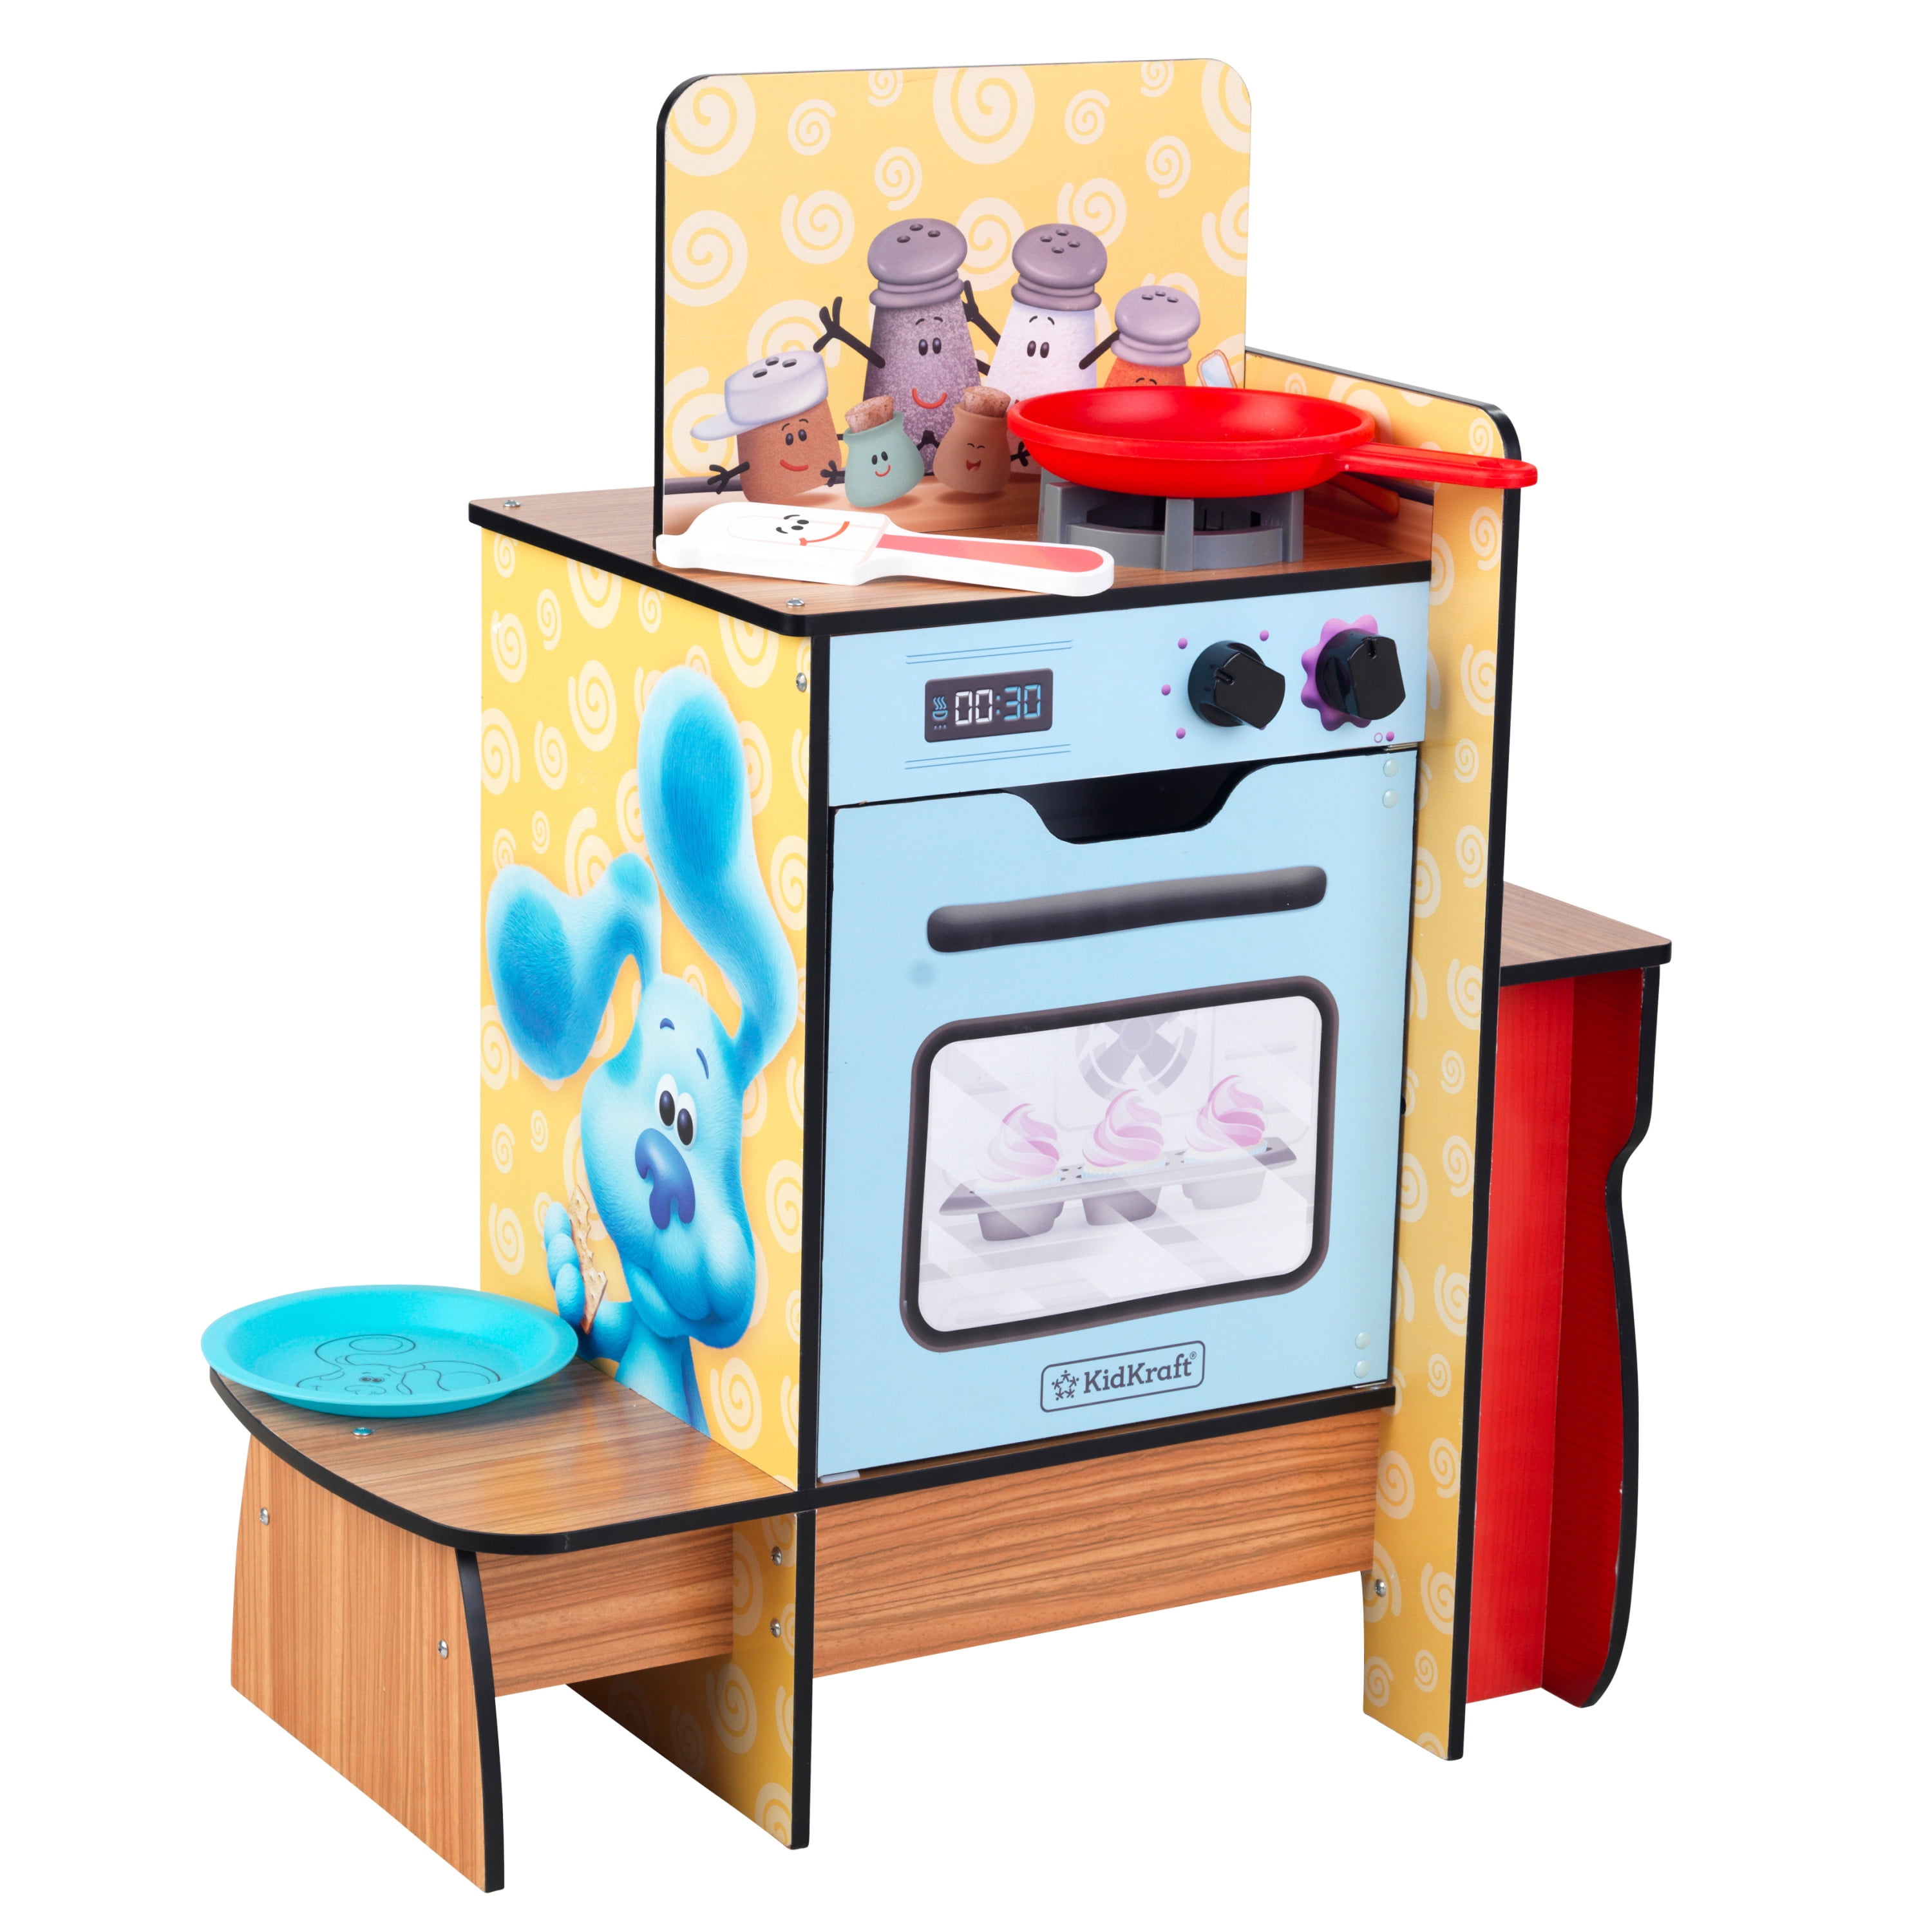 KidKraft 53536 Kids Kitchen Wooden Toy Toaster Set in Modern Metallic Colours Play Kitchen Accessory 